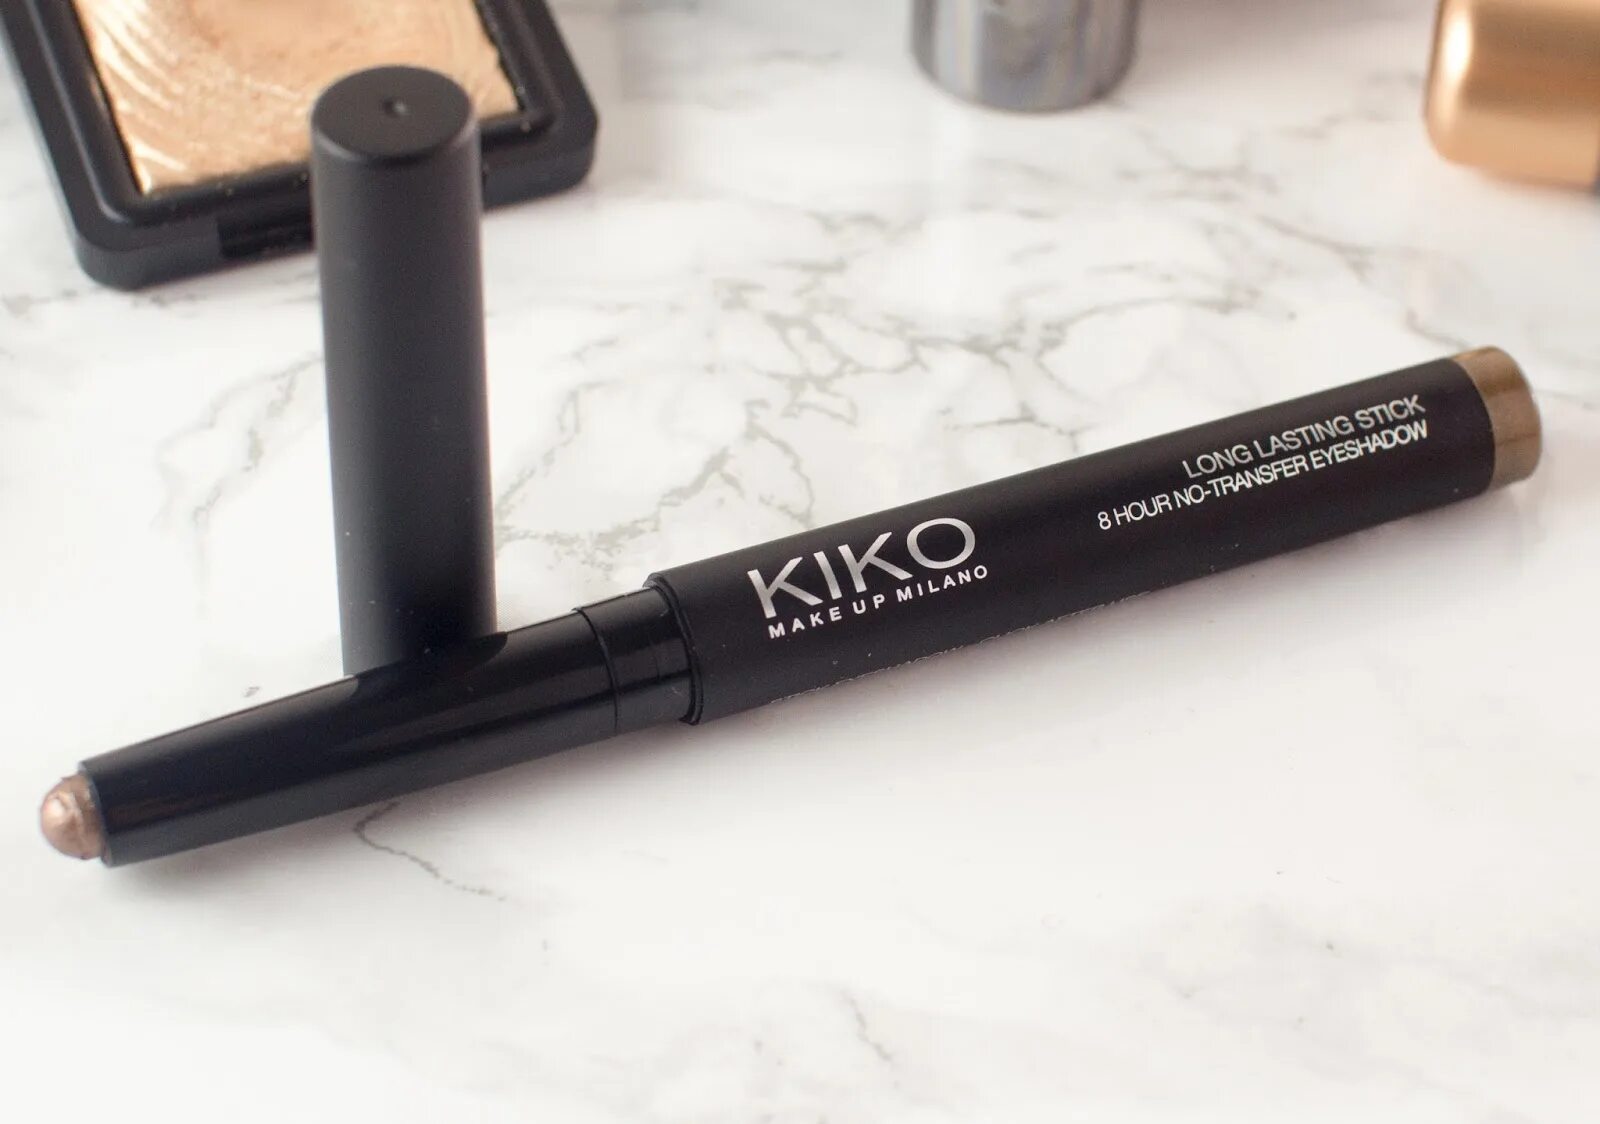 Kiko stick eyeshadow. Kiko Milano long lasting Eyeshadow Stick. Kiko Milano long lasting Eyeshadow Stick 31. Kiko Milano long lasting Eyeshadow Stick 60. Kiko Eyeshadow Stick.